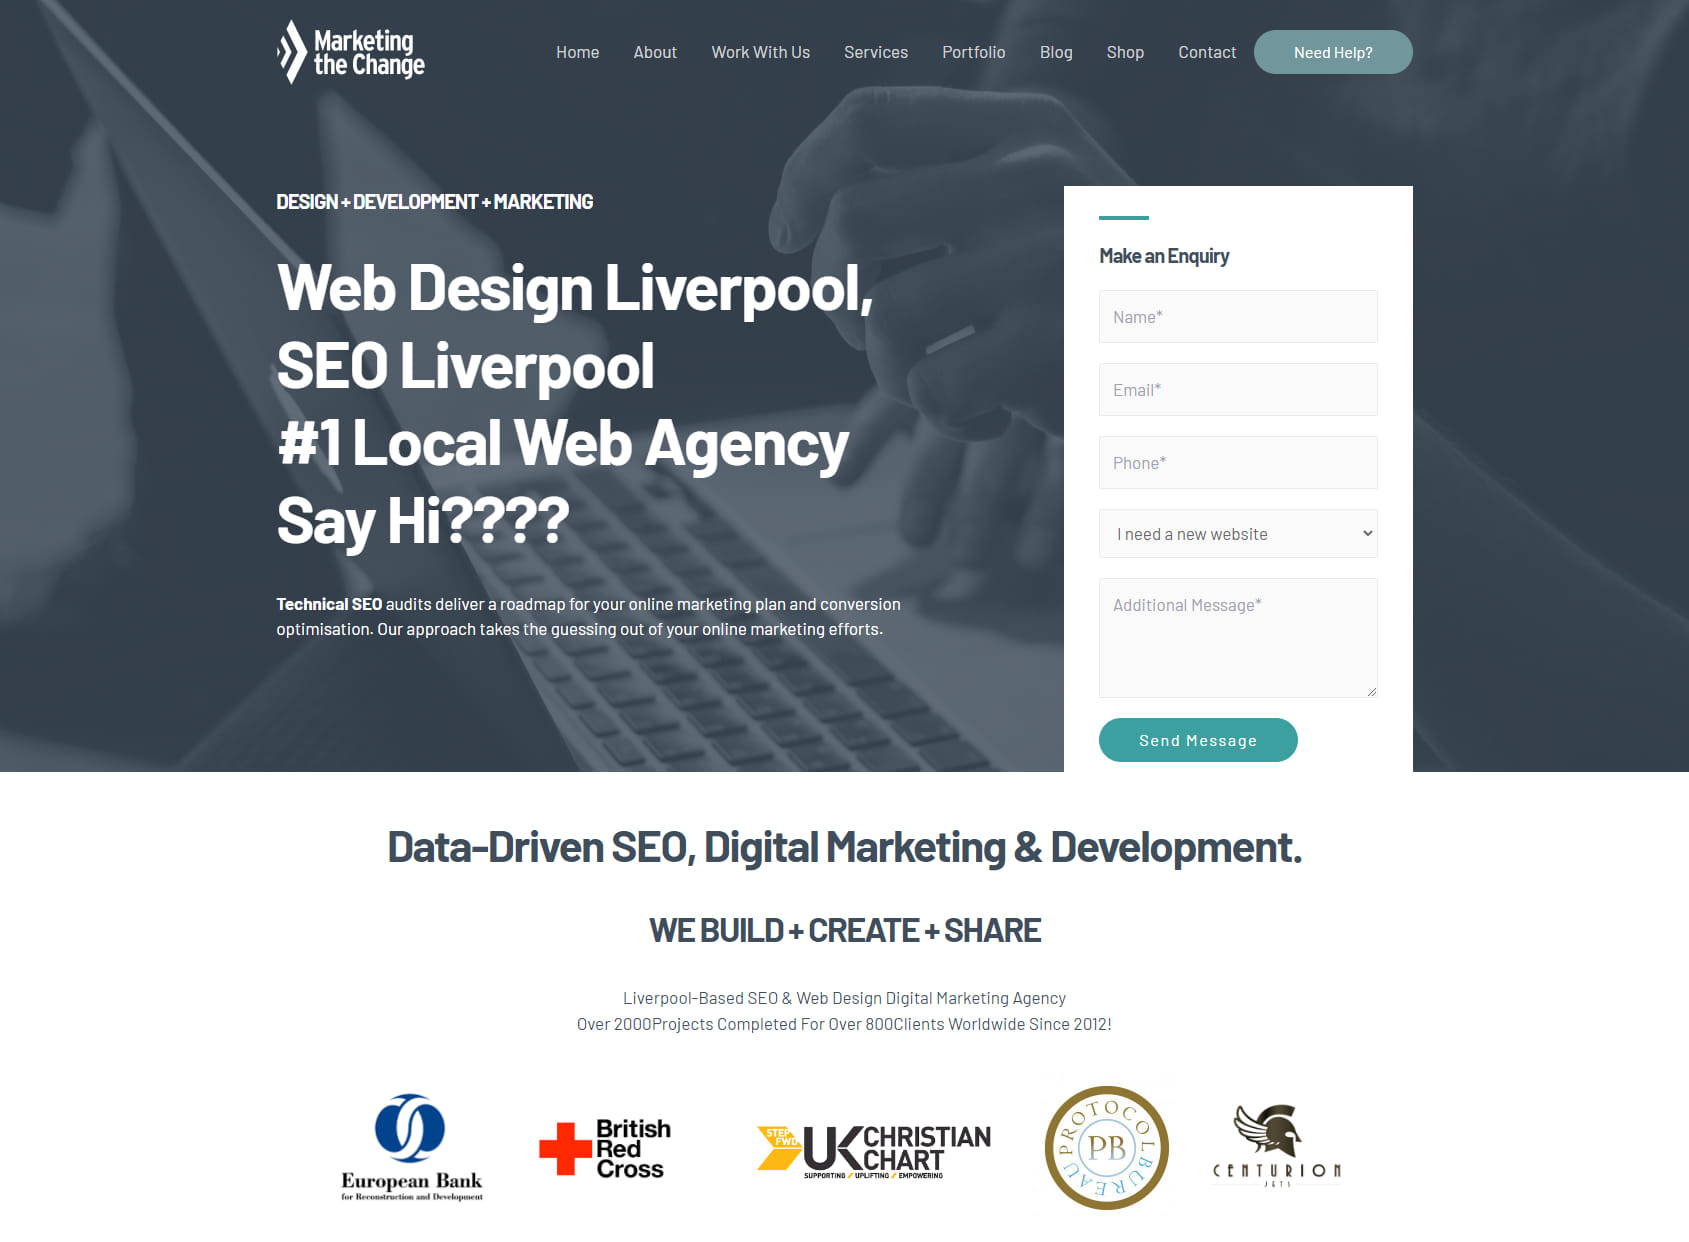 Marketing the Change Liverpool Web Design & SEO